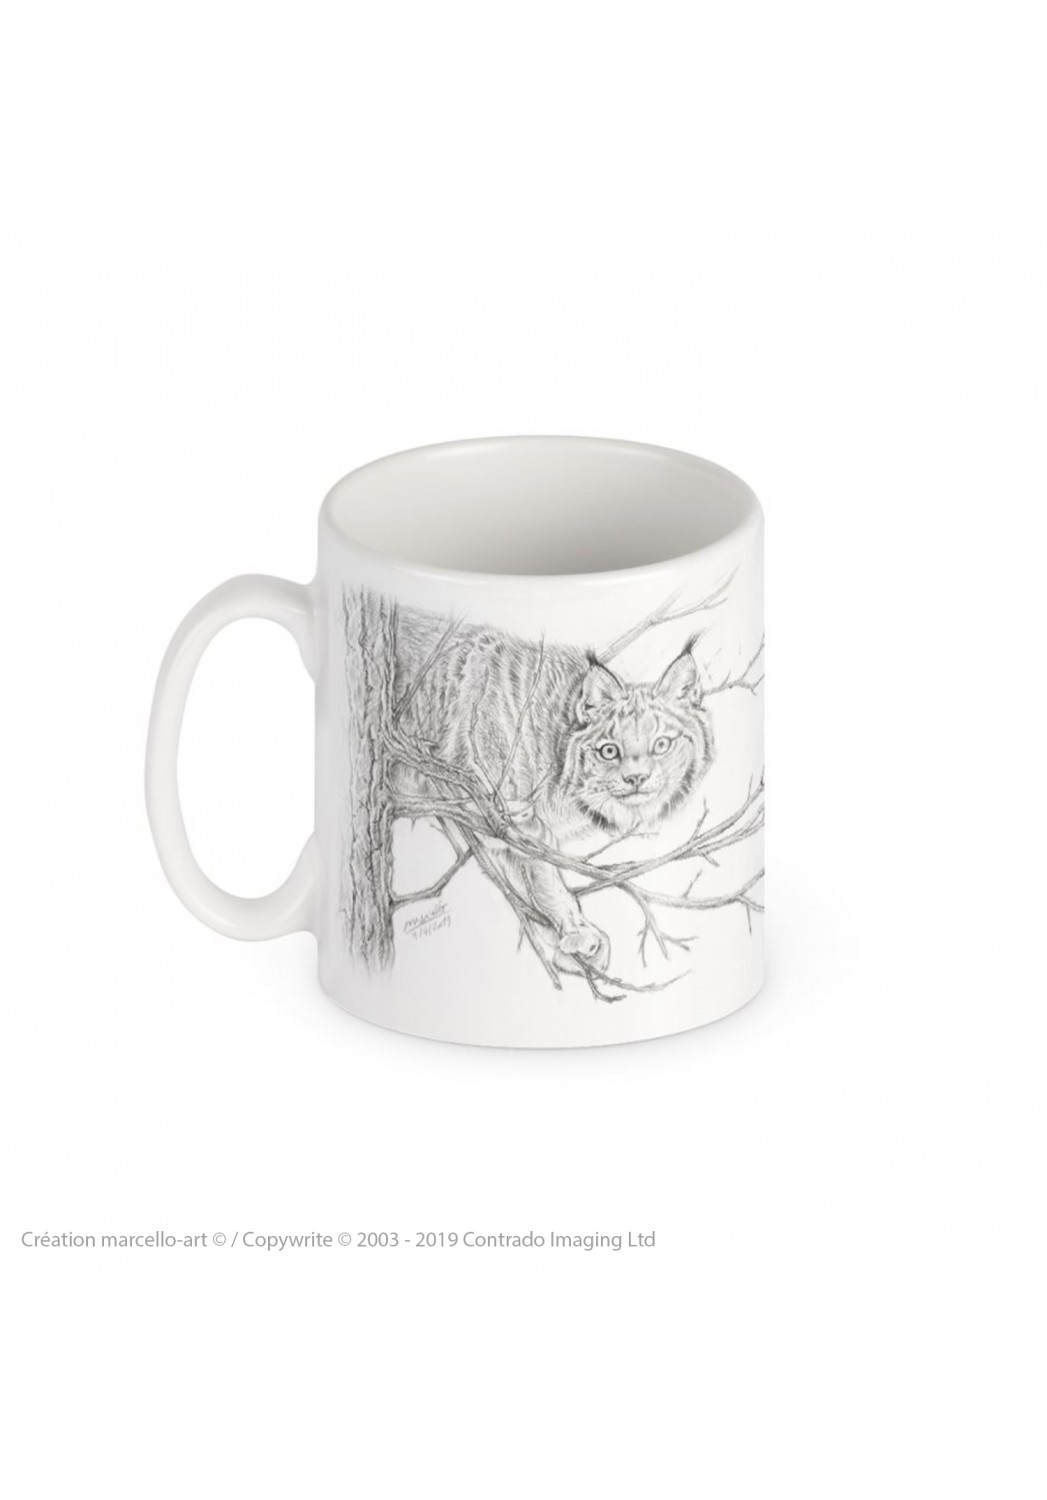 Marcello-art: Decoration accessoiries Porcelain mug 393 linx